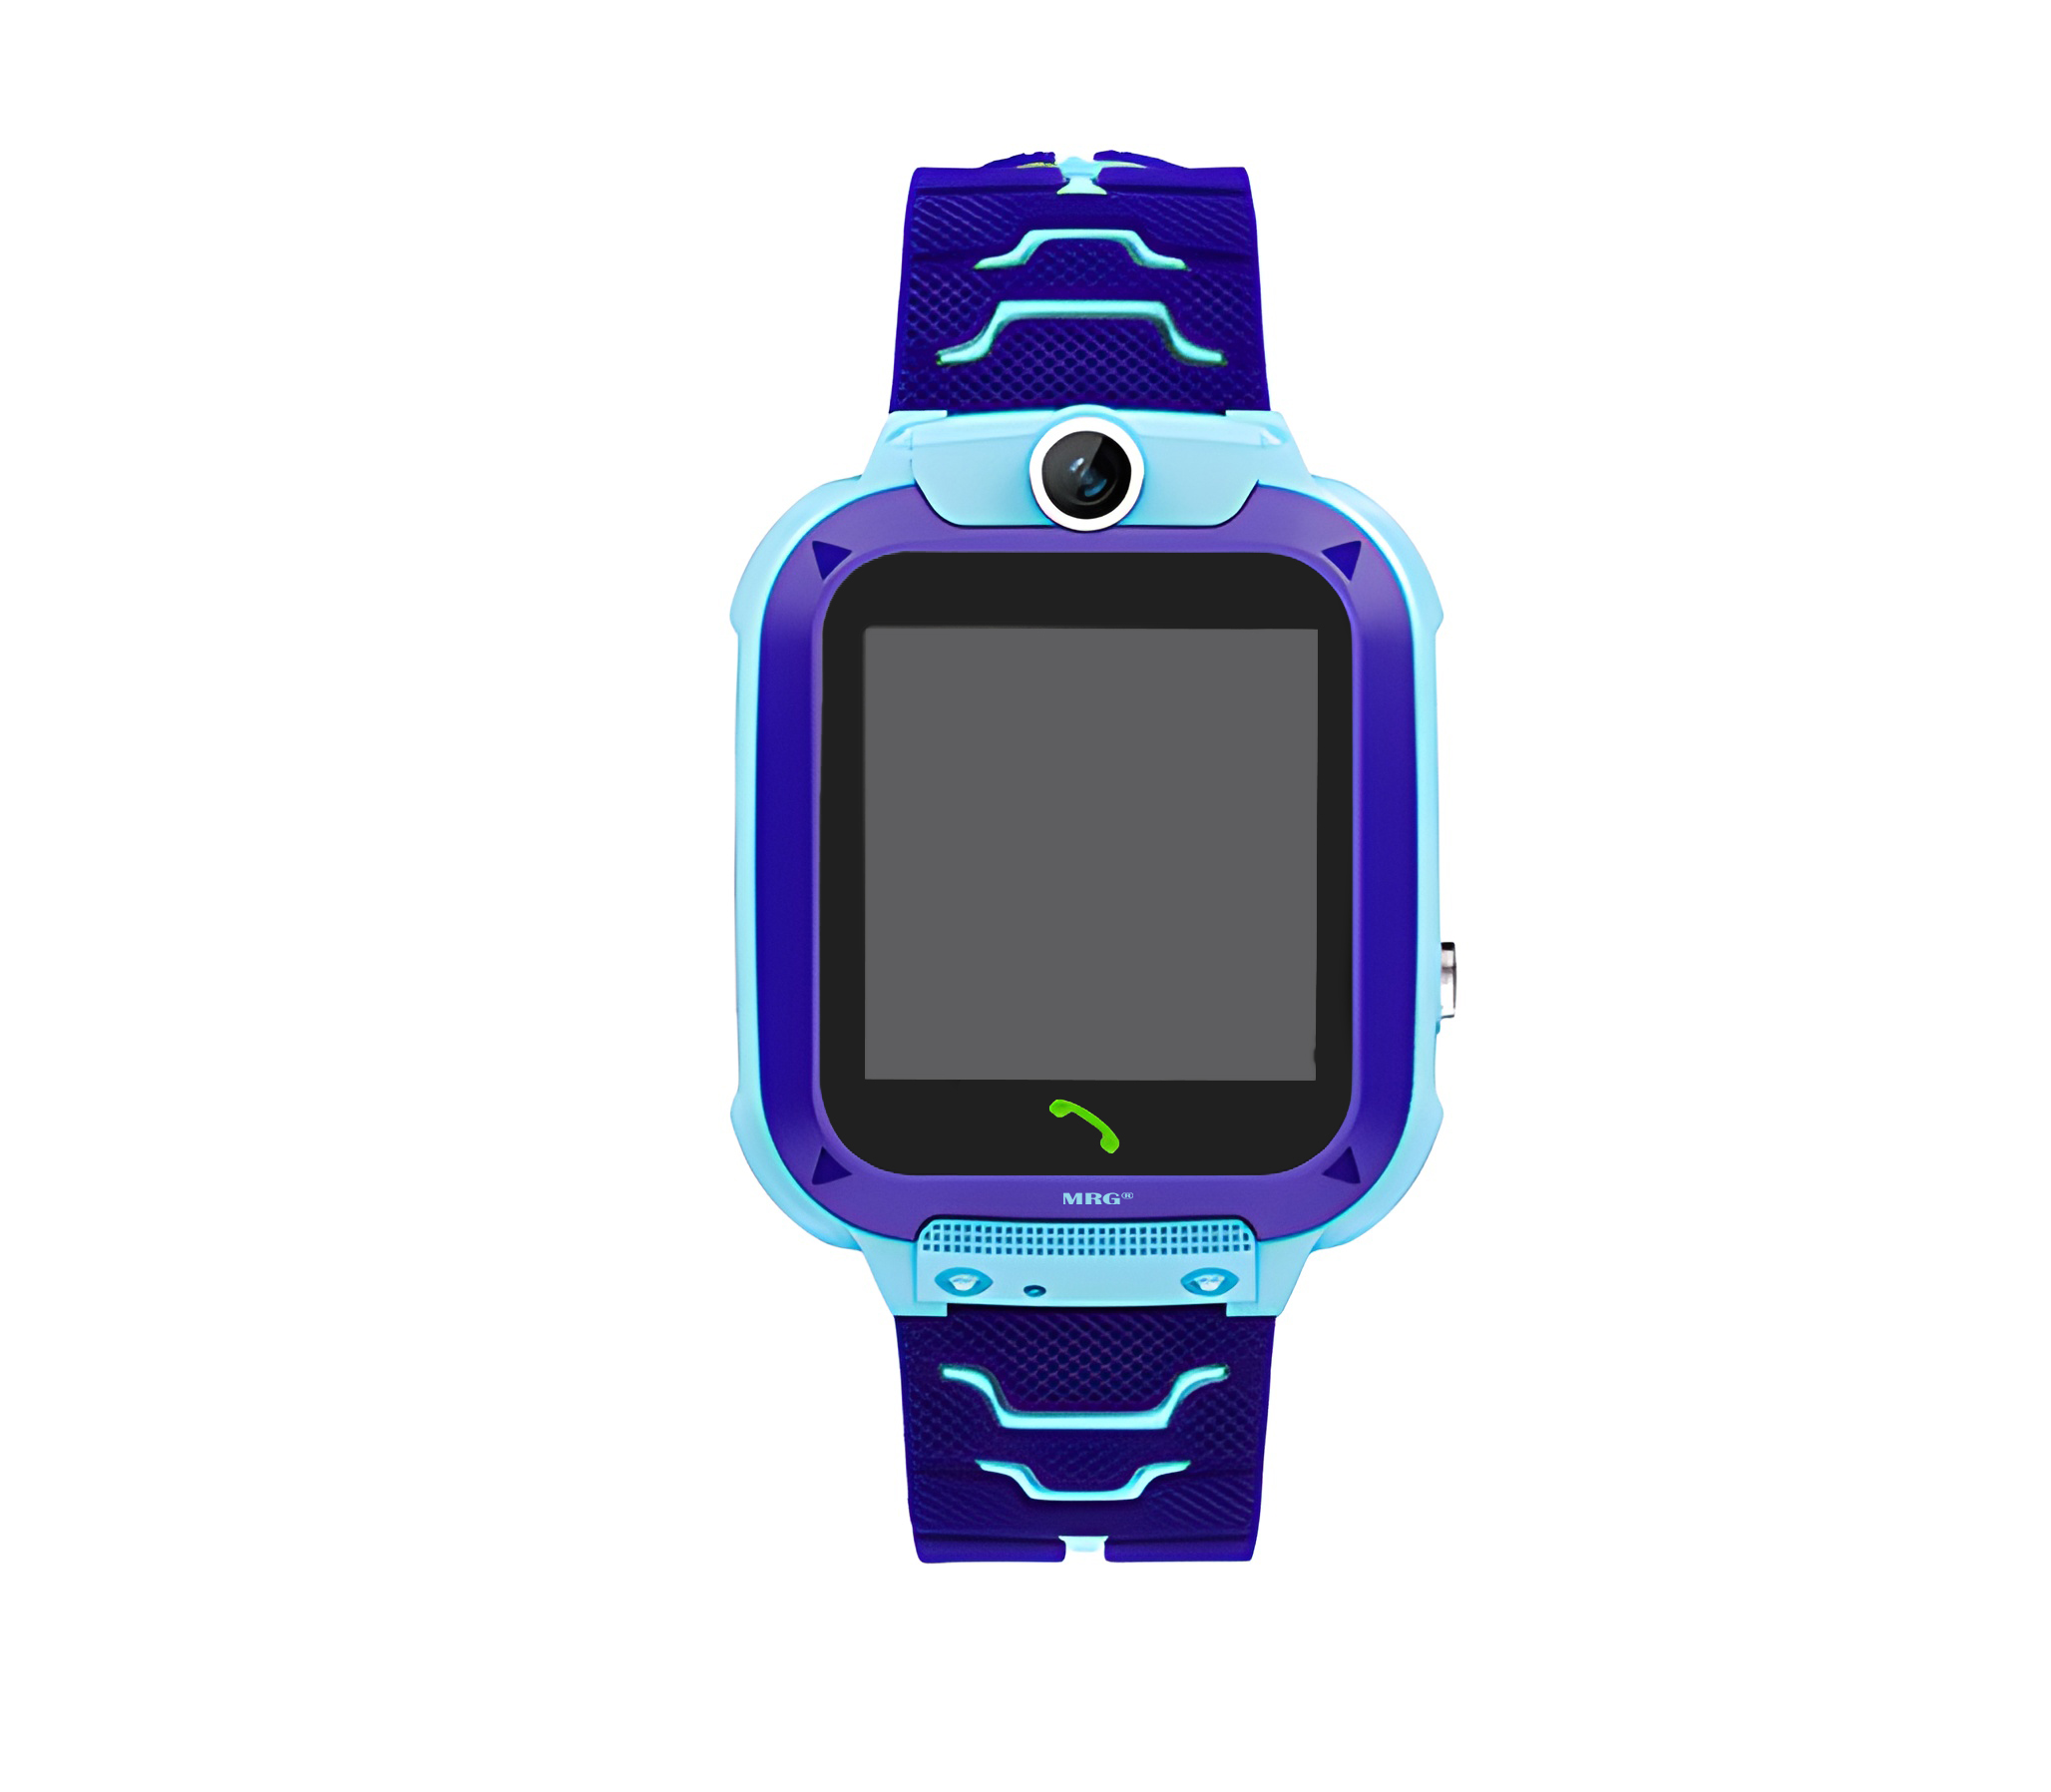 Ceas Smartwatch MRG MGM8, Camera foto, 1.5inch, Albastru